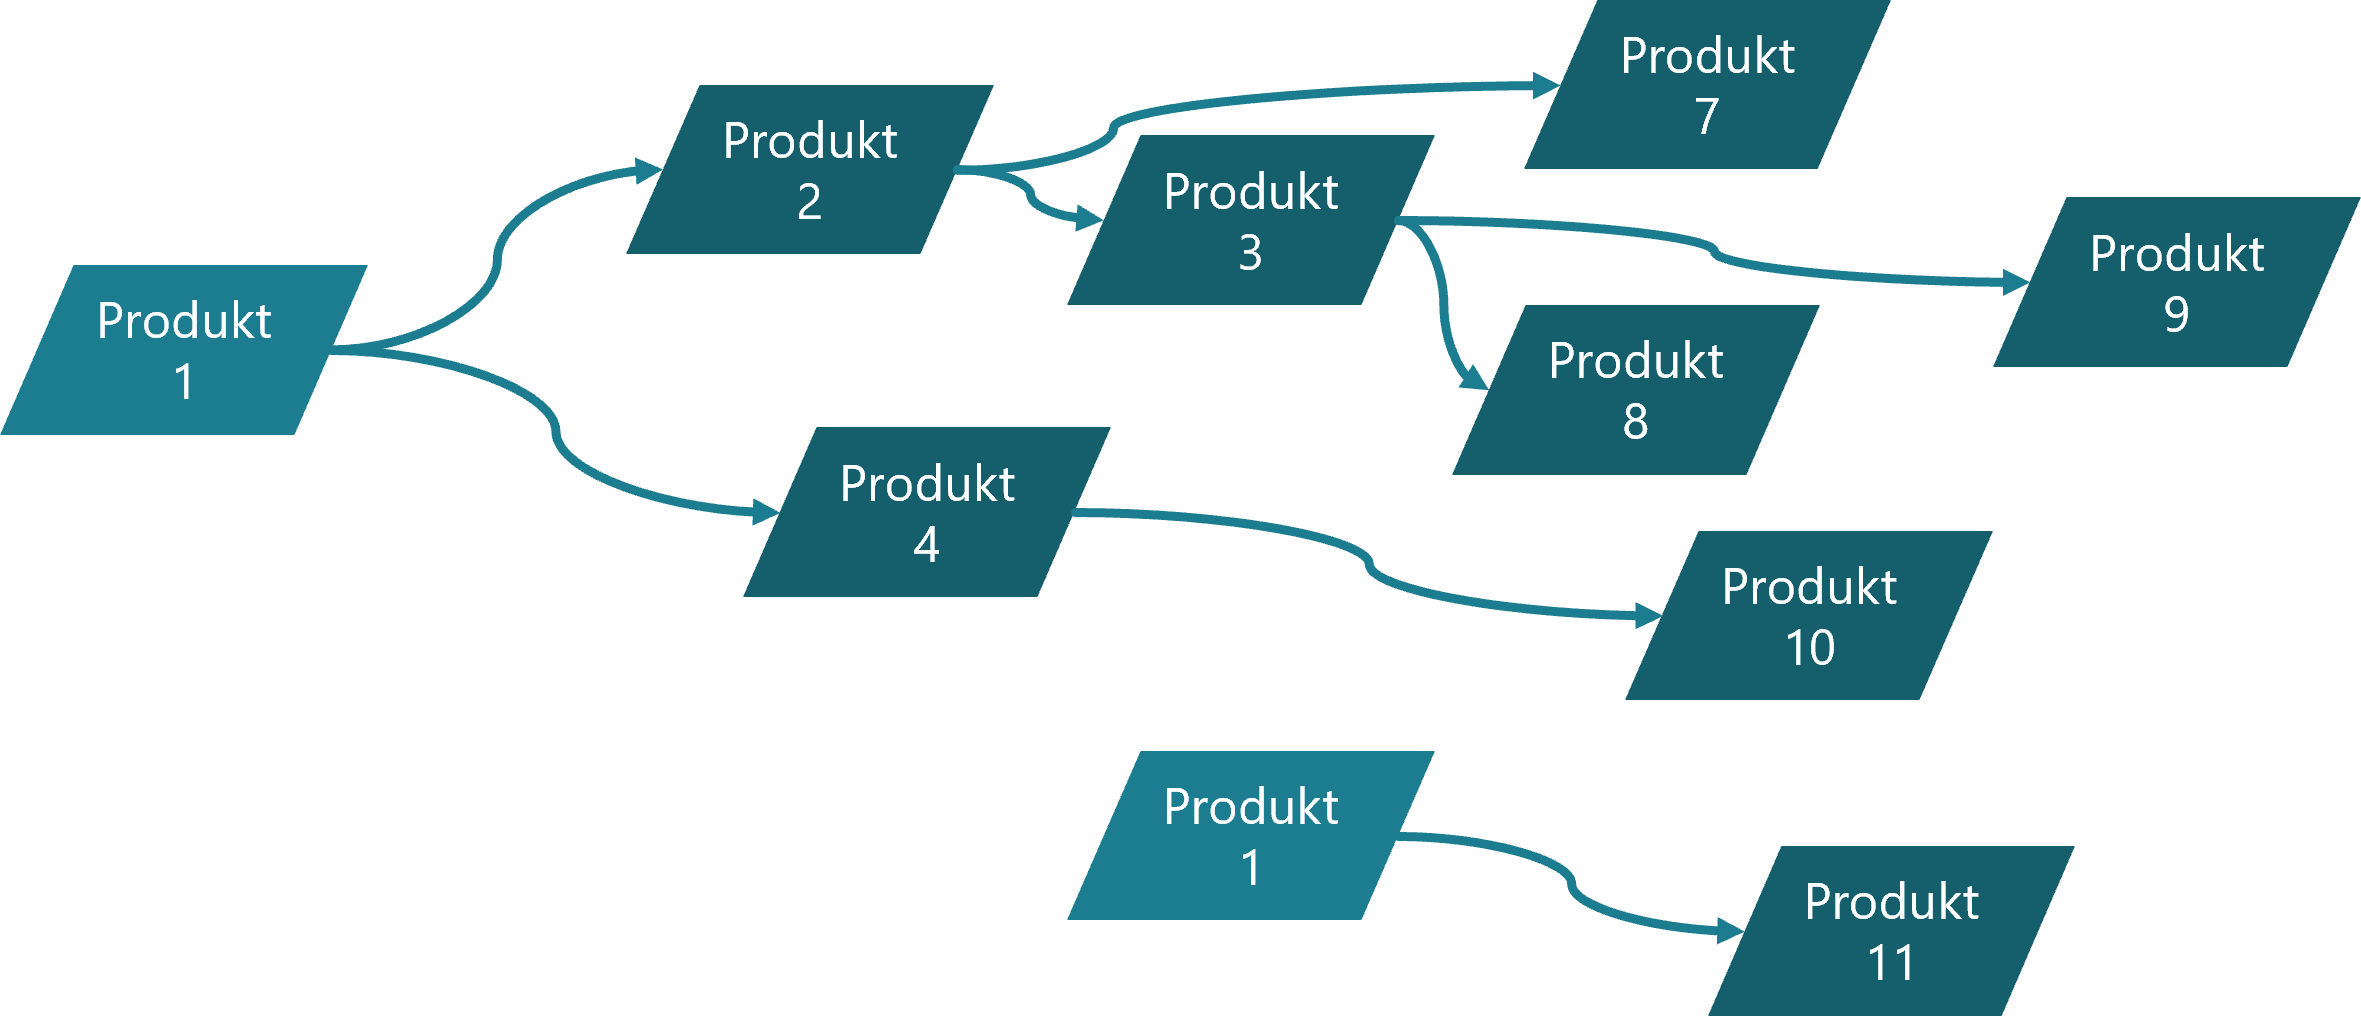 produktkonfiguration-produkte-kopieren